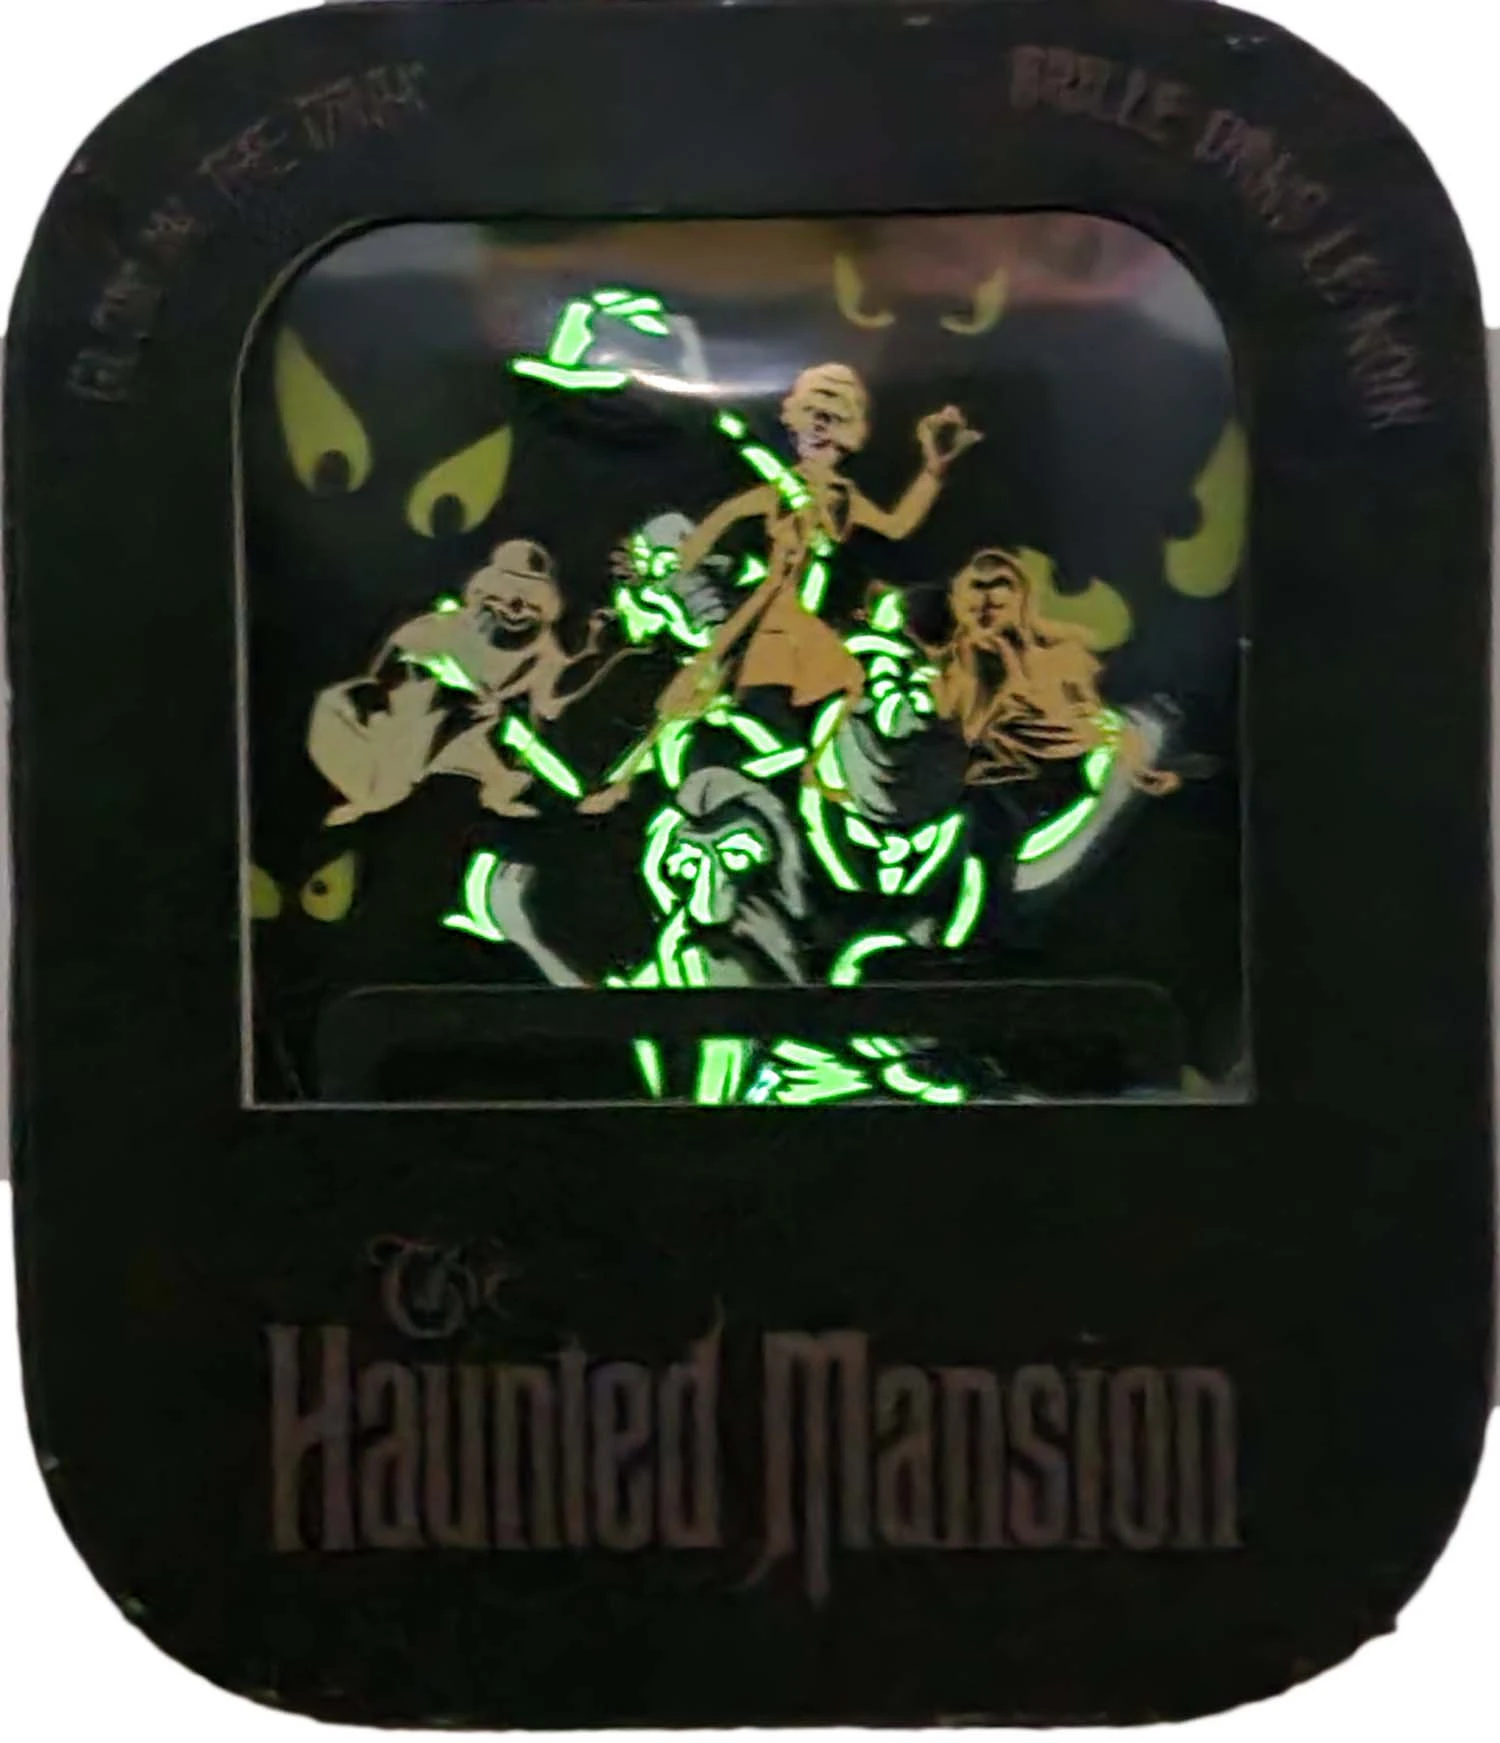 item Disney Pin - Haunted Mansion - Holiday Gifting Ornament Holiday Gifting Haunted Mansion b